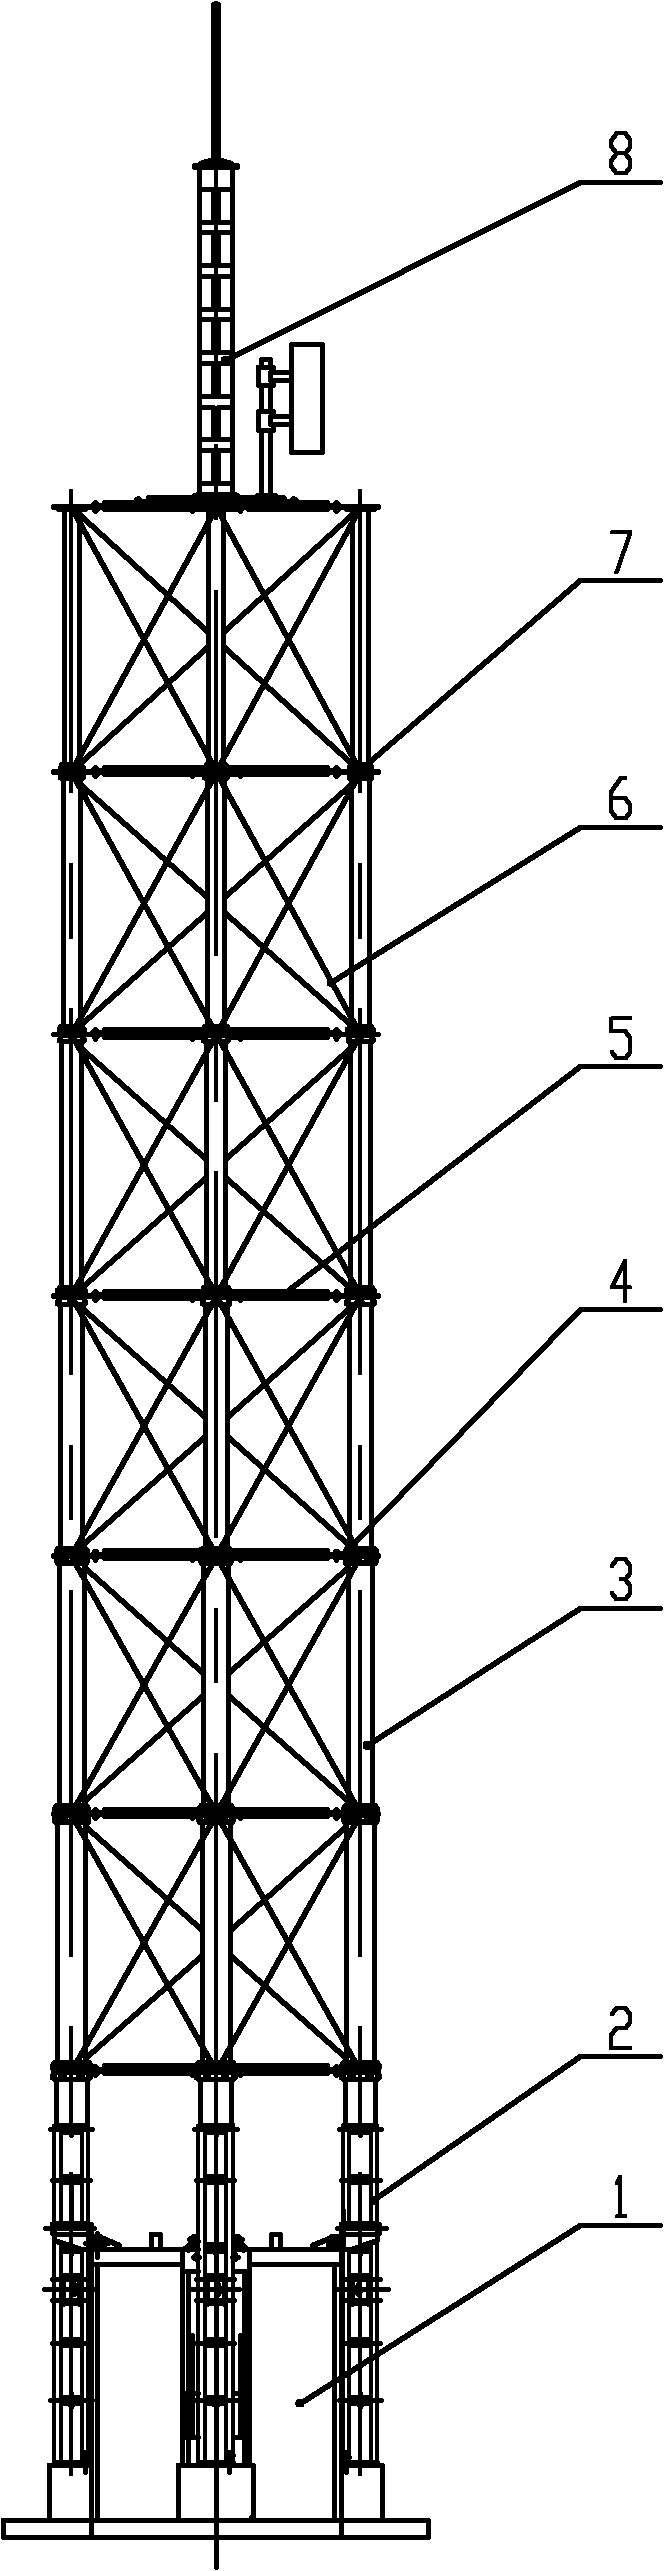 Pneumatic lifting communication tower